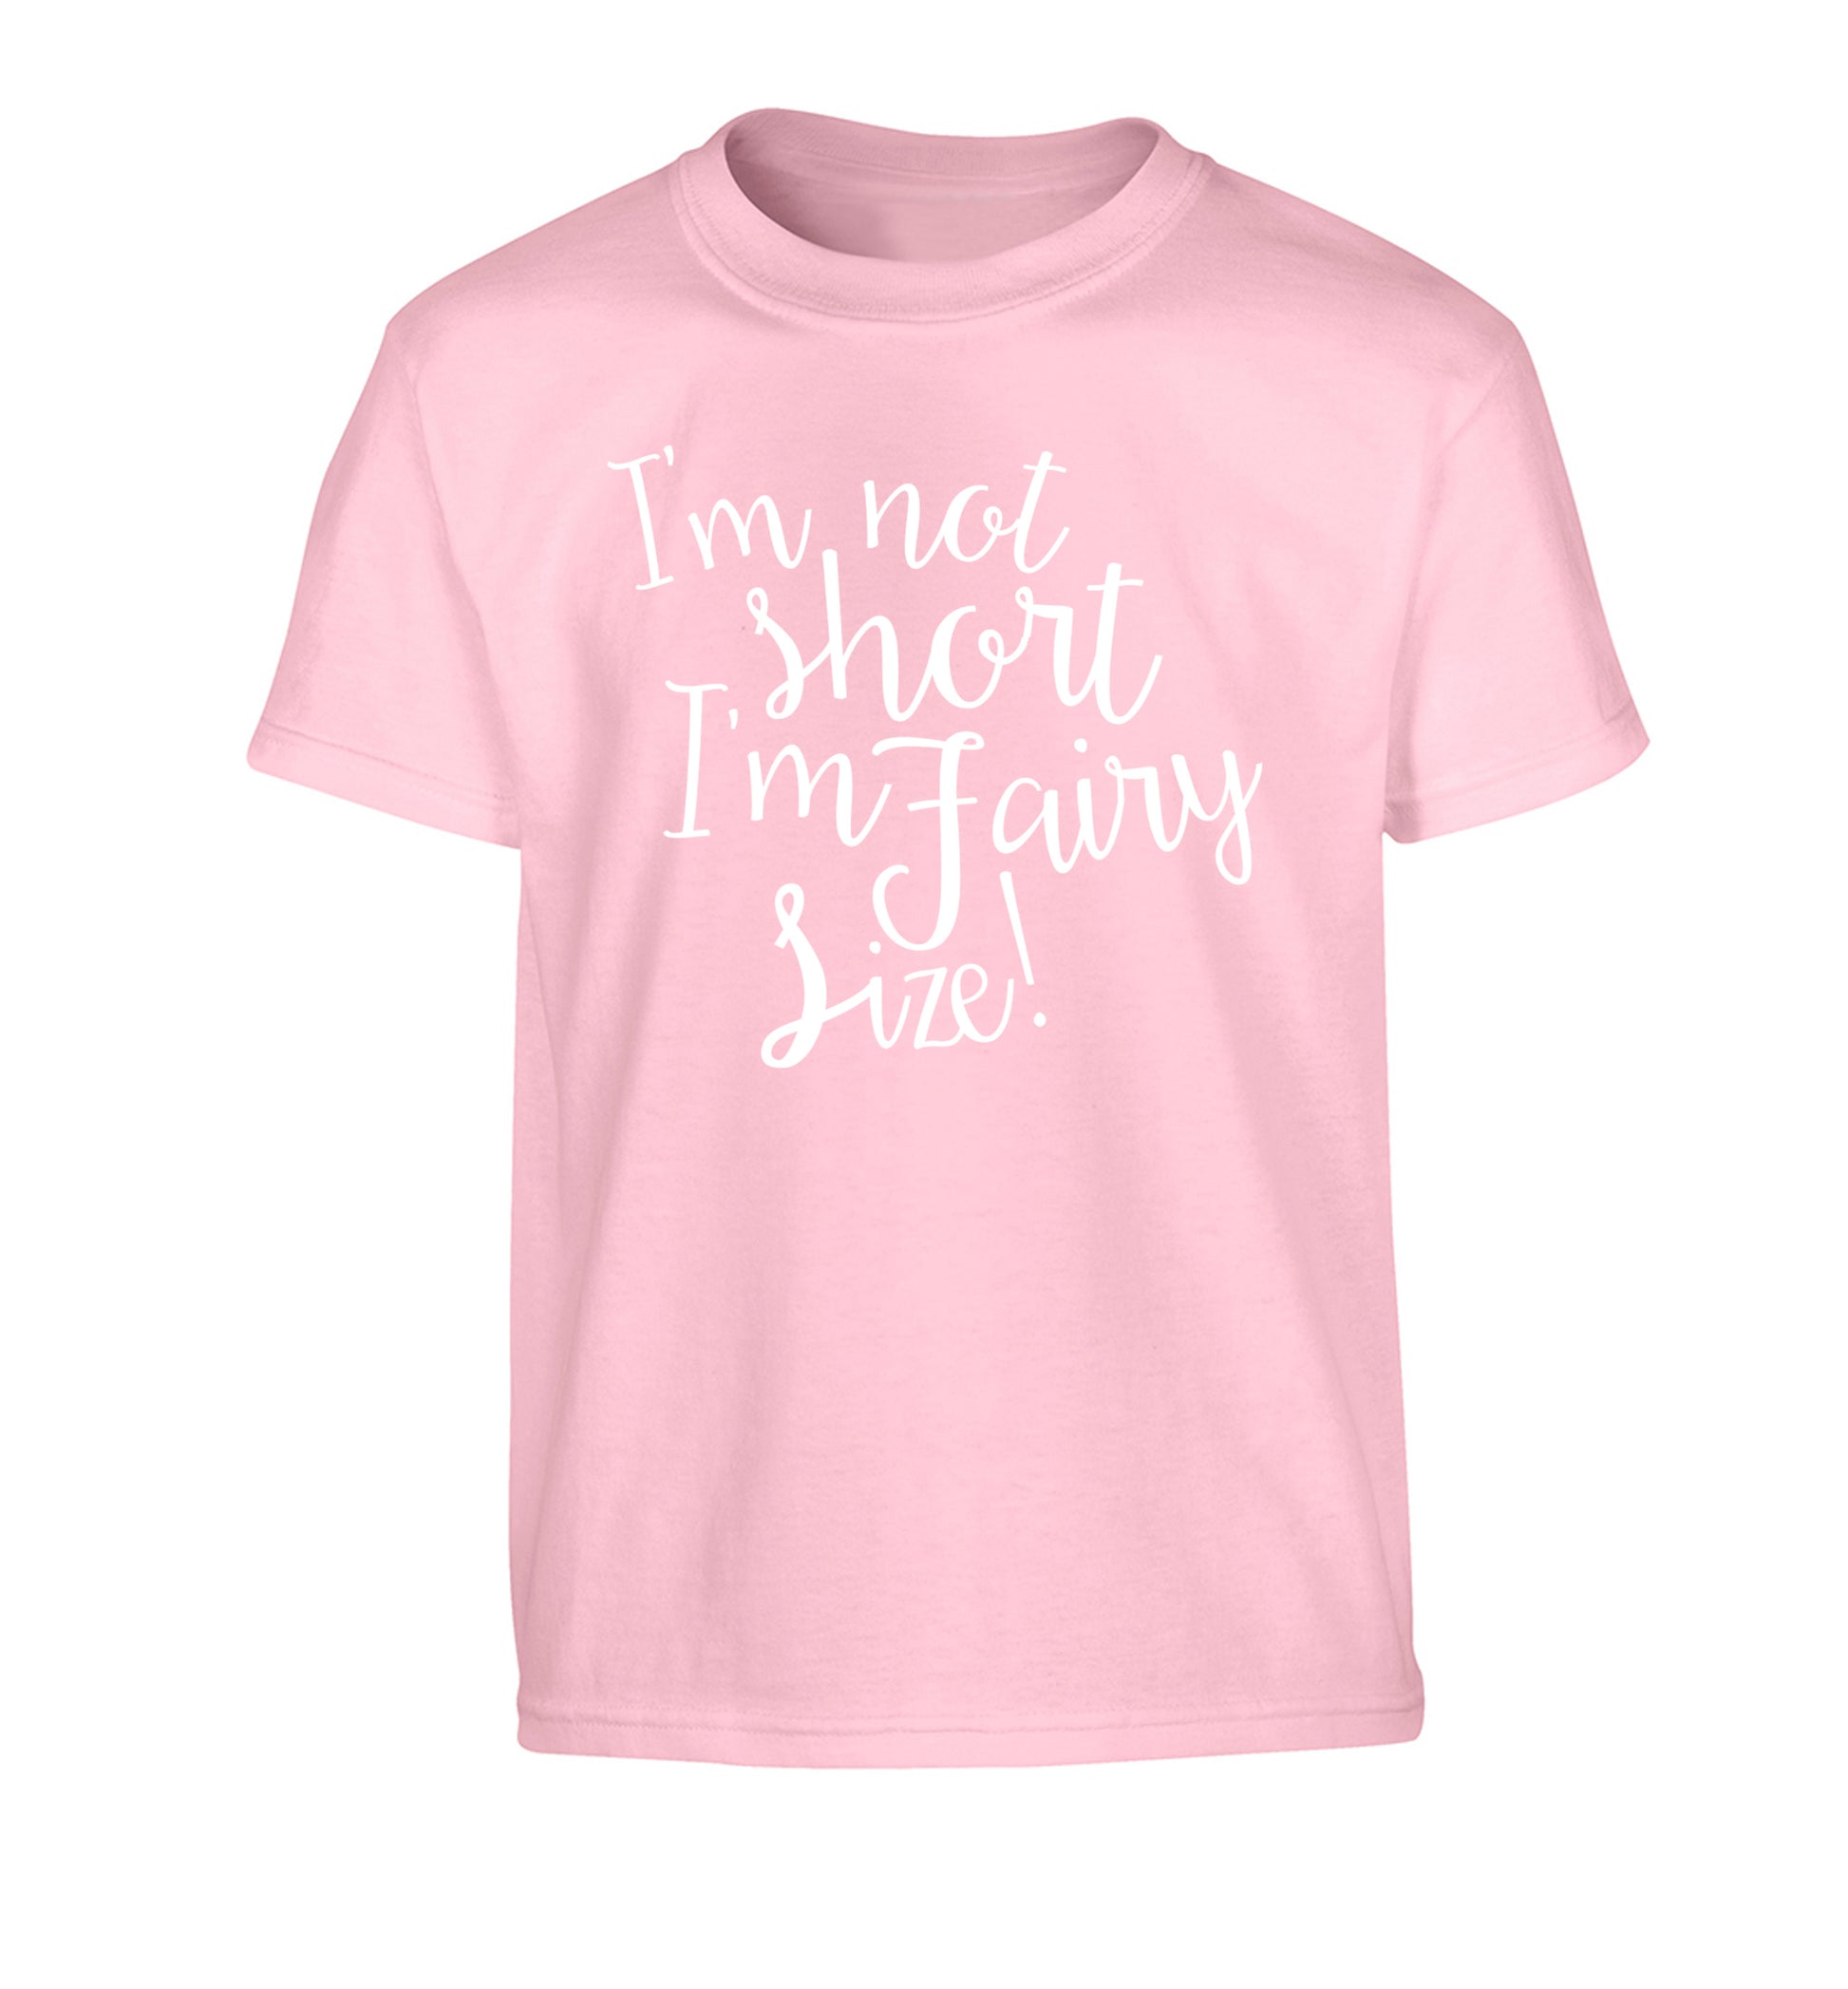 I'm not short I'm fairy sized! Children's light pink Tshirt 12-13 Years